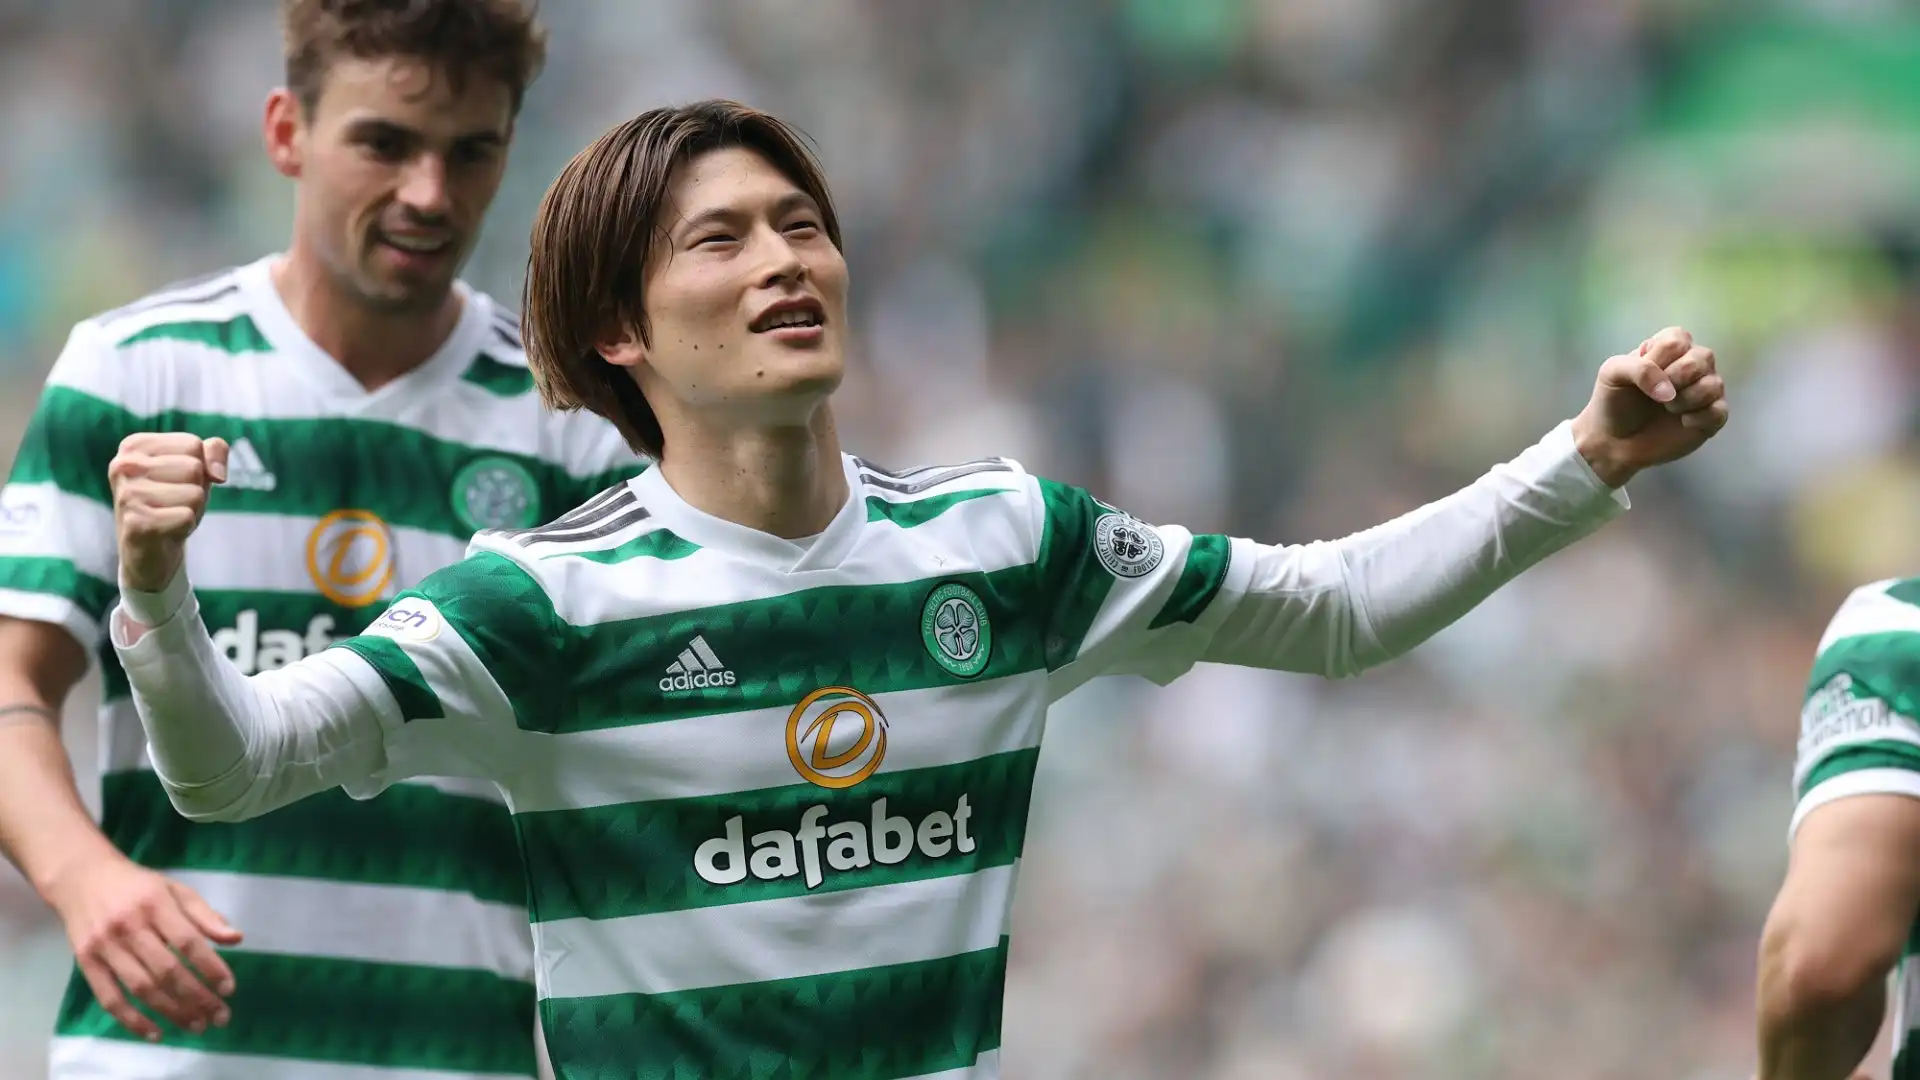 15 Kyogo Furuhashi (Attaccante, Giappone, Celtic FC): 9 milioni di euro